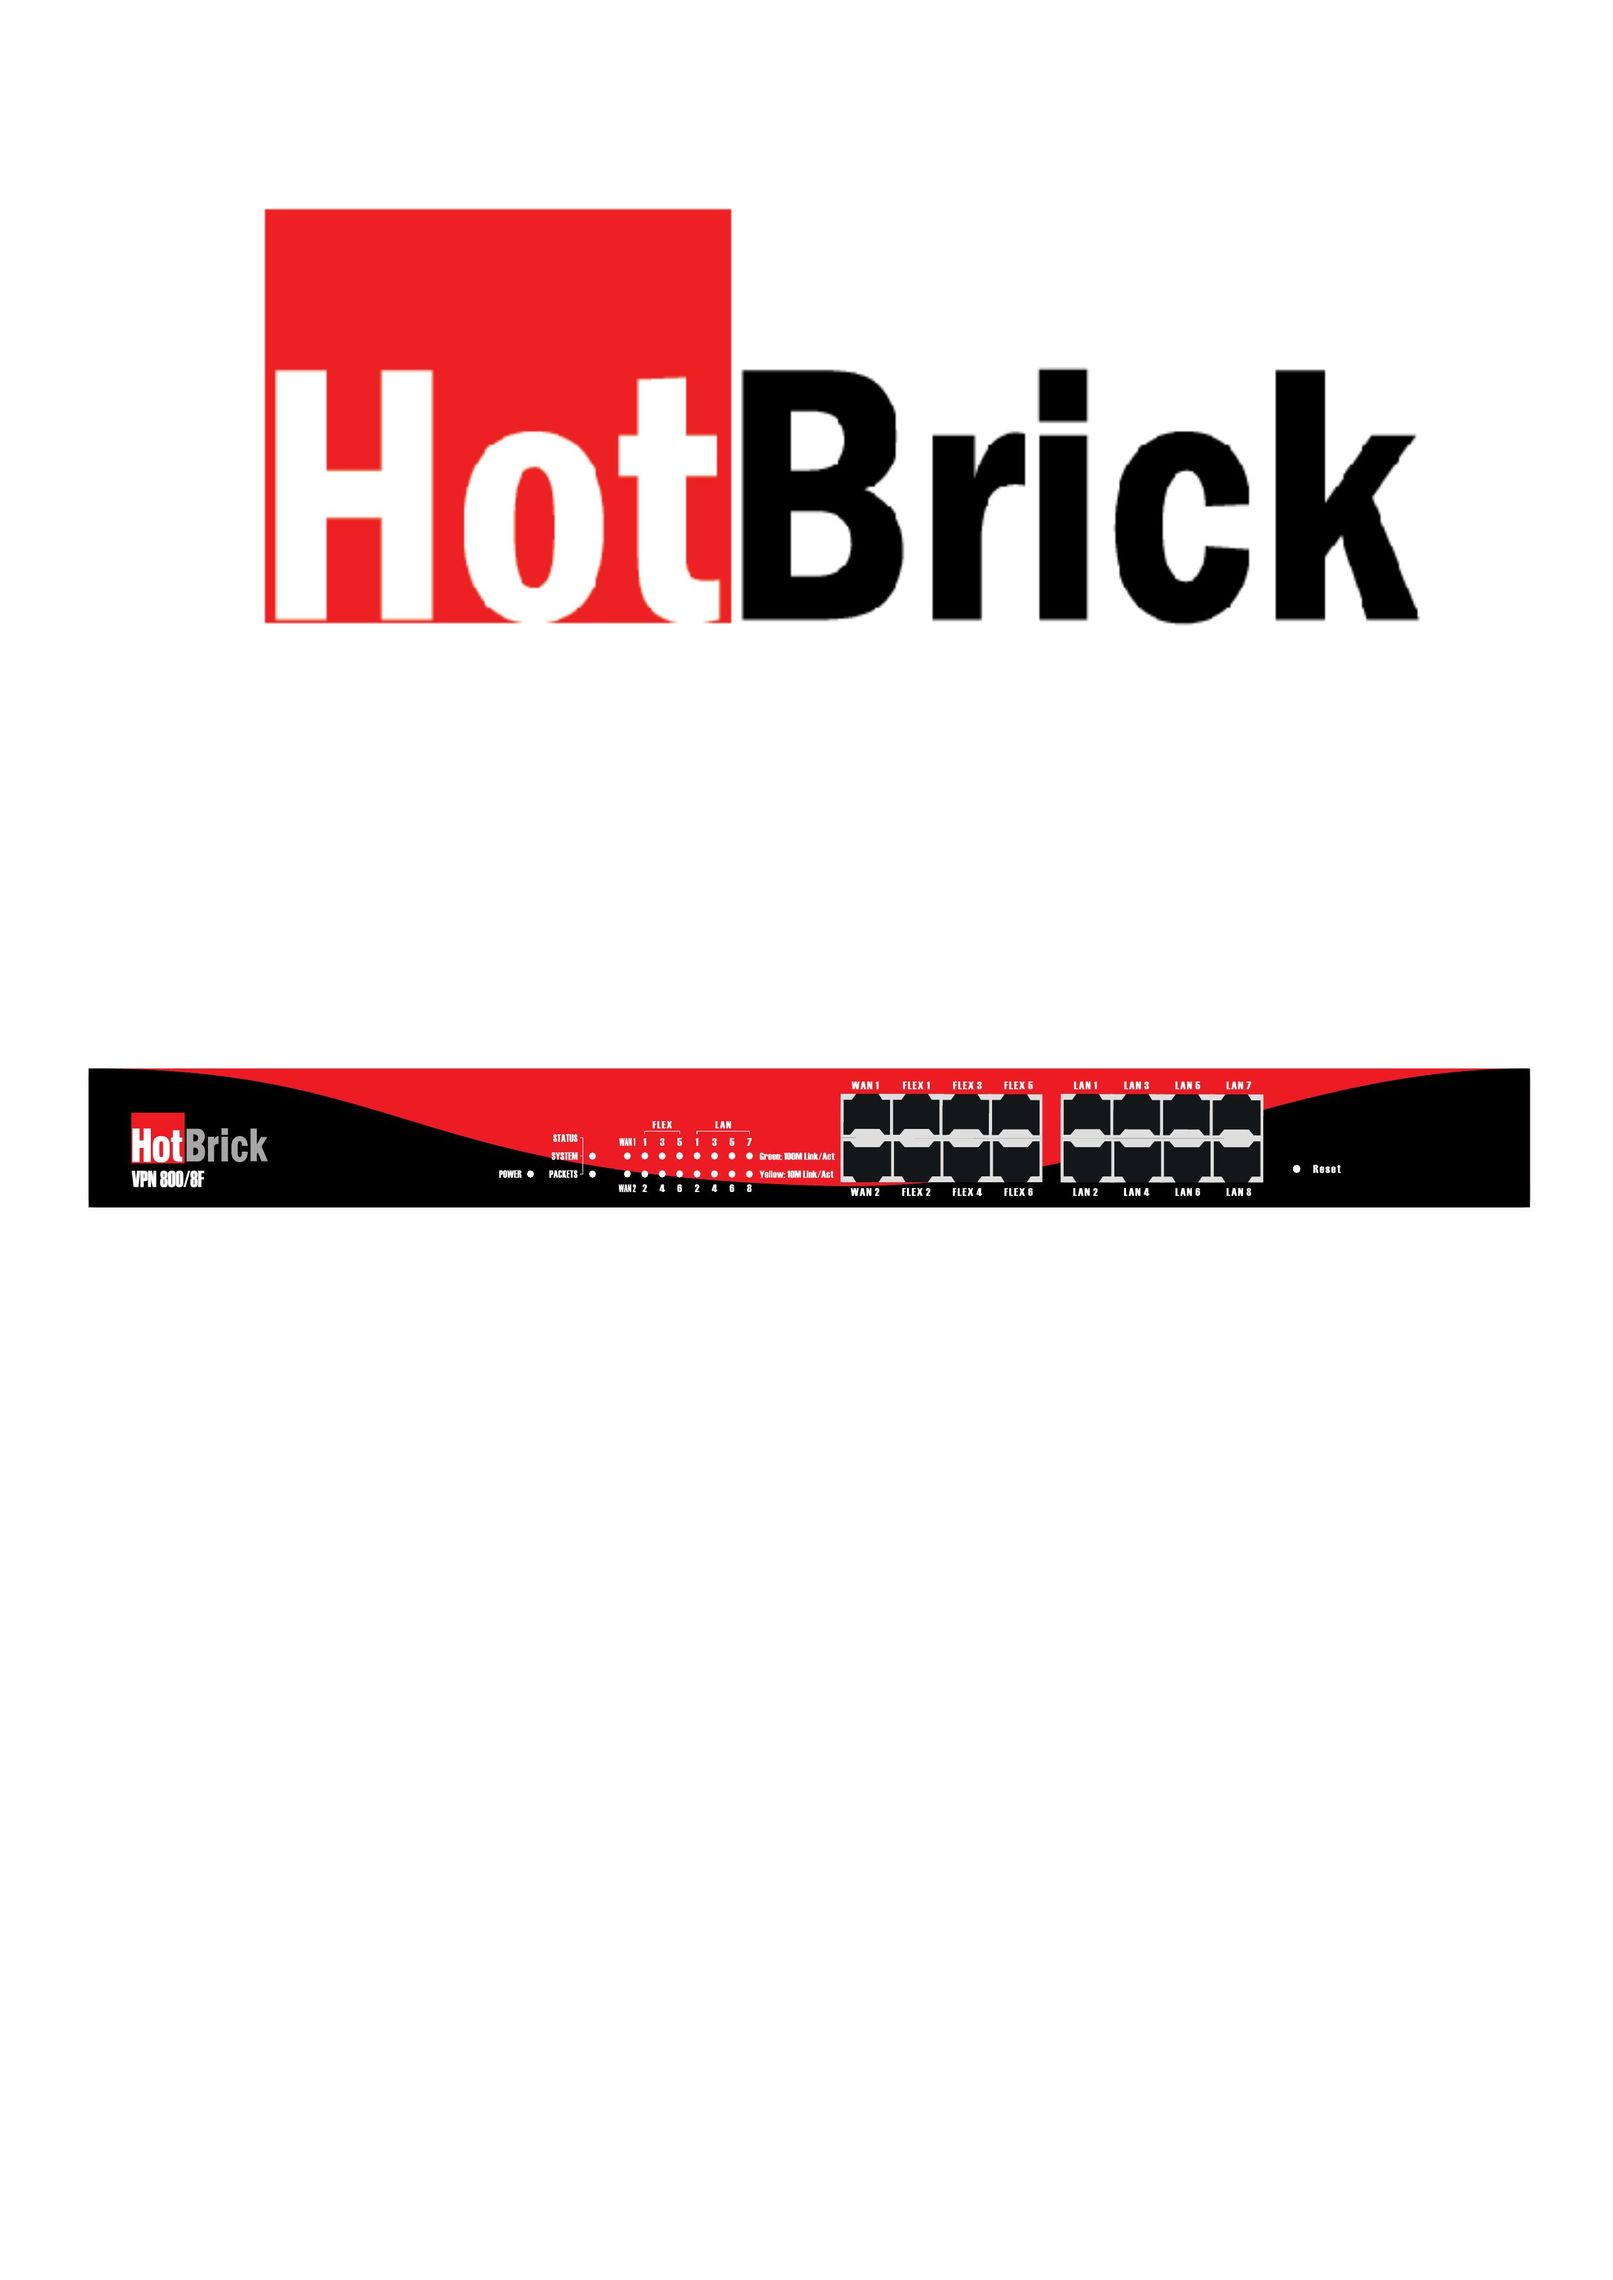 HotBrick VPN 800/8 F Network Router User Manual